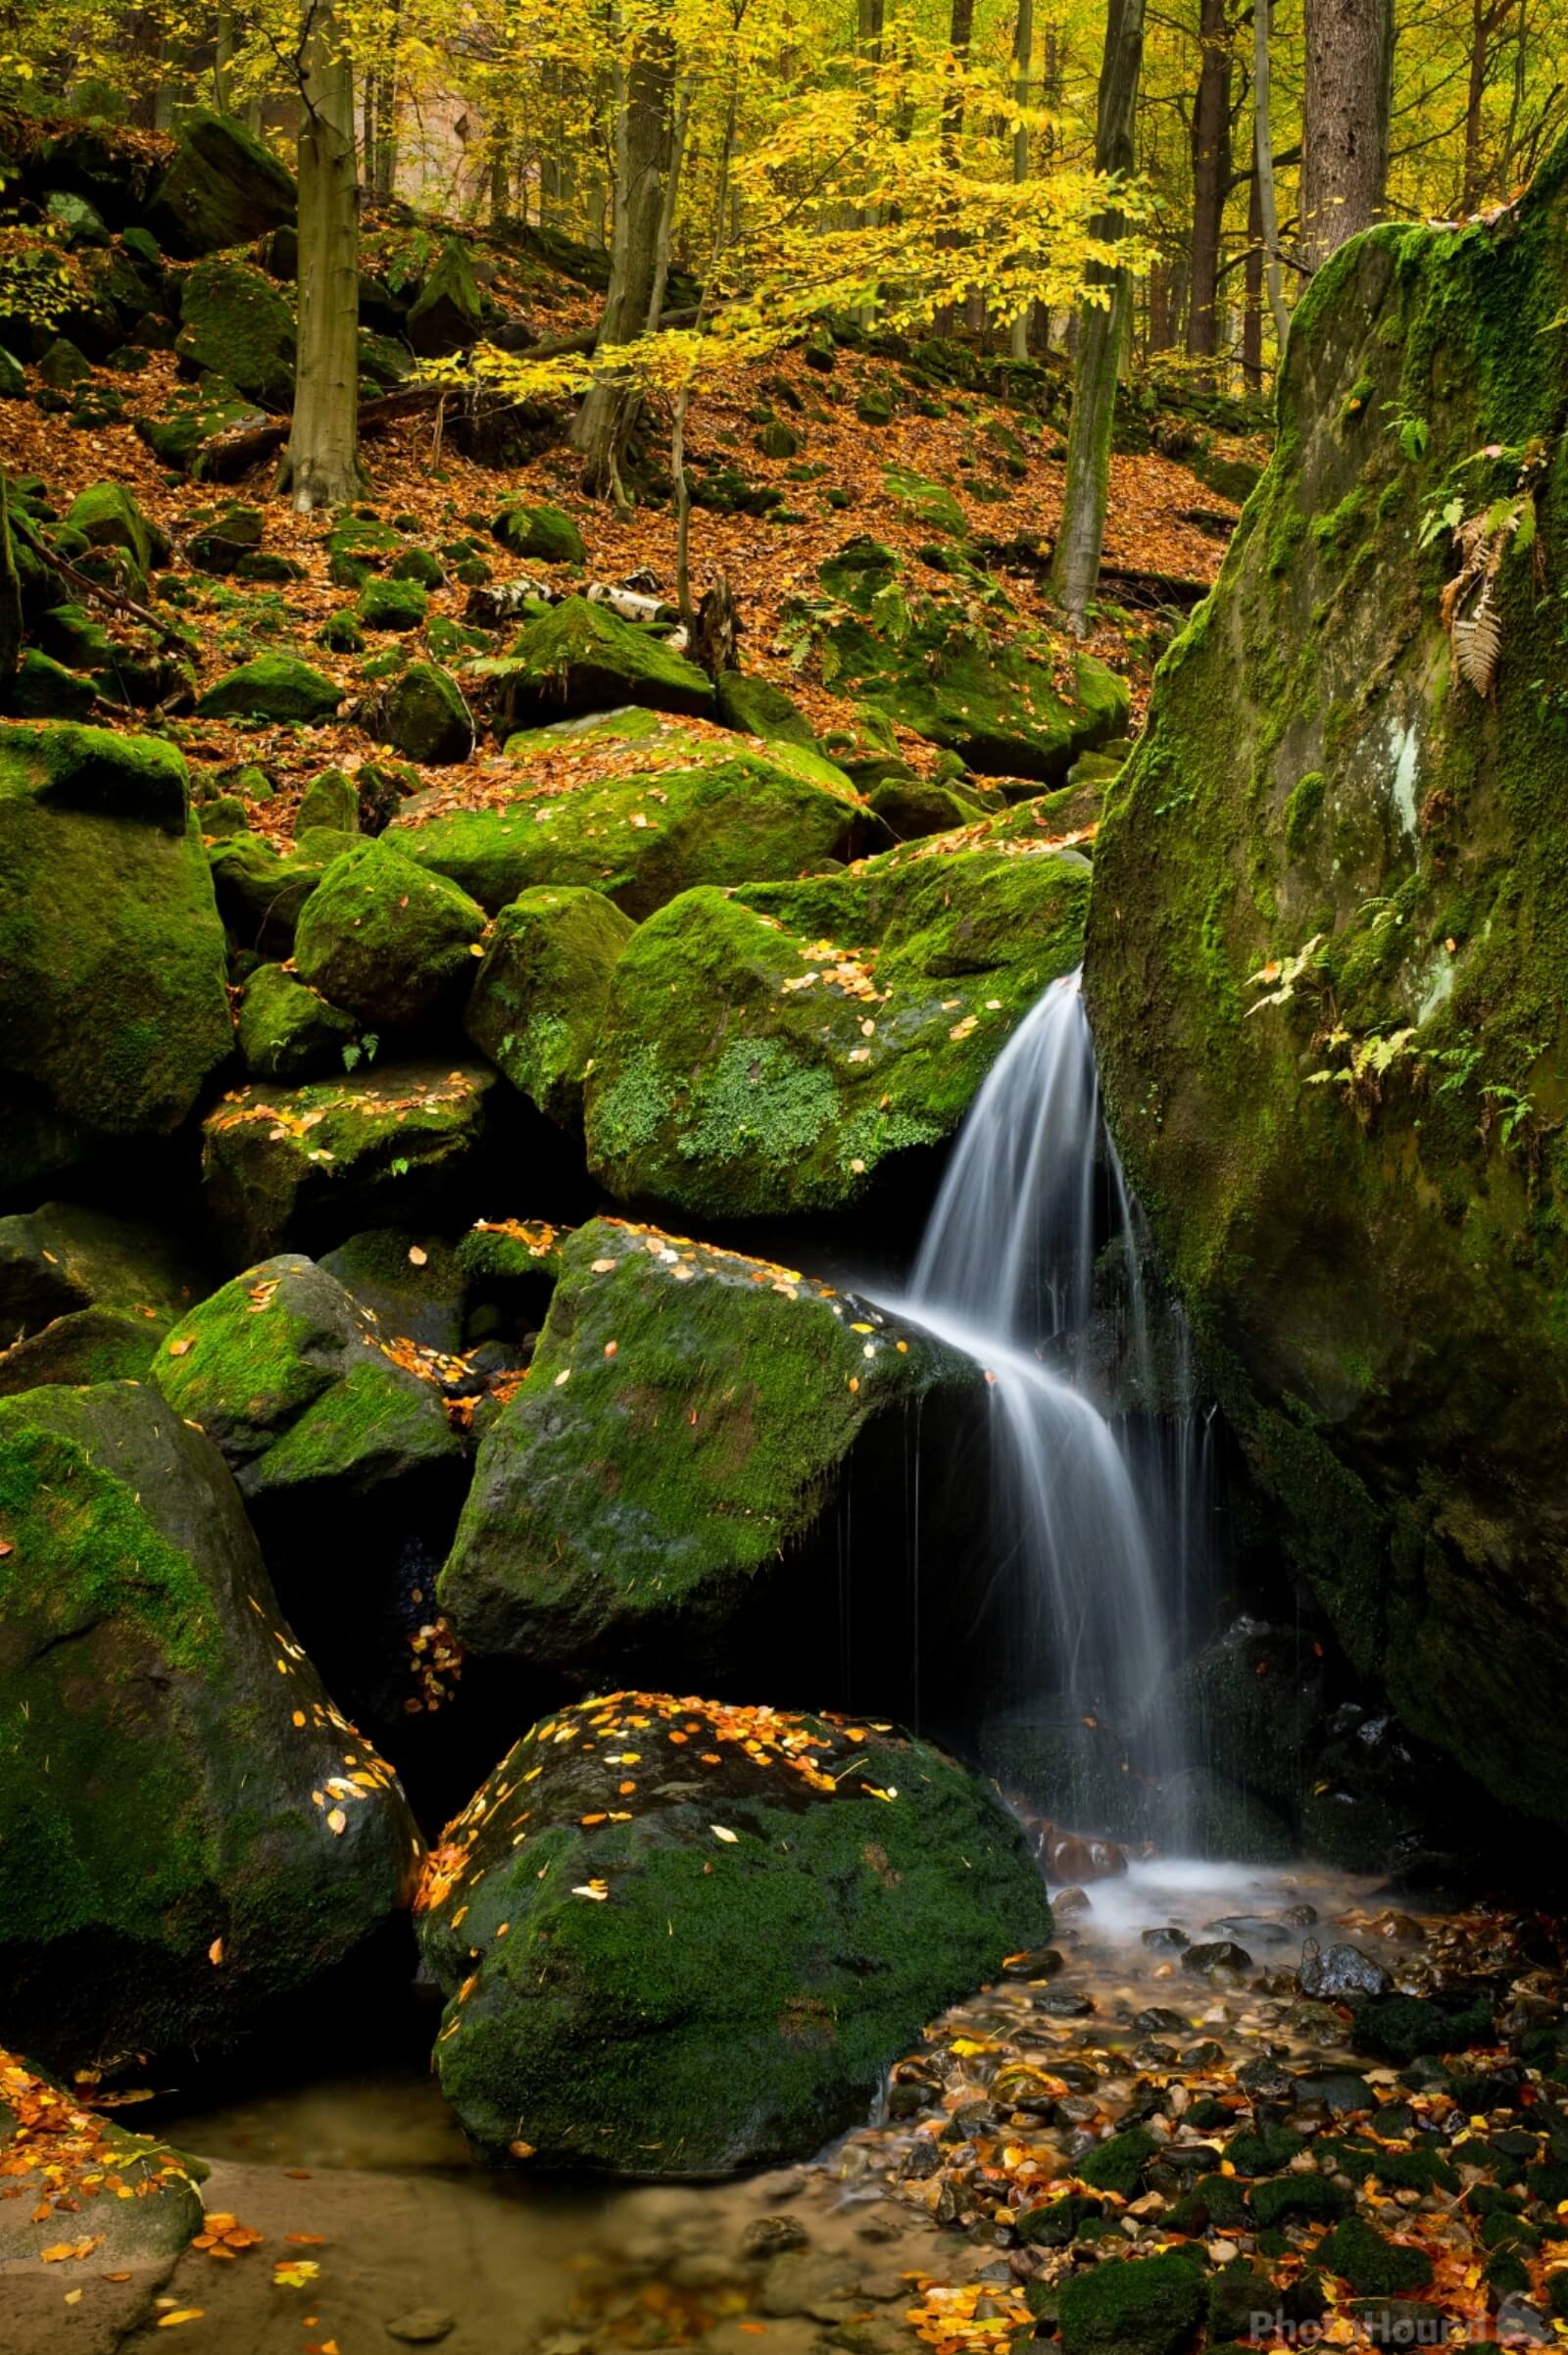 Image of Suchá Kamenice waterfall by VOJTa Herout